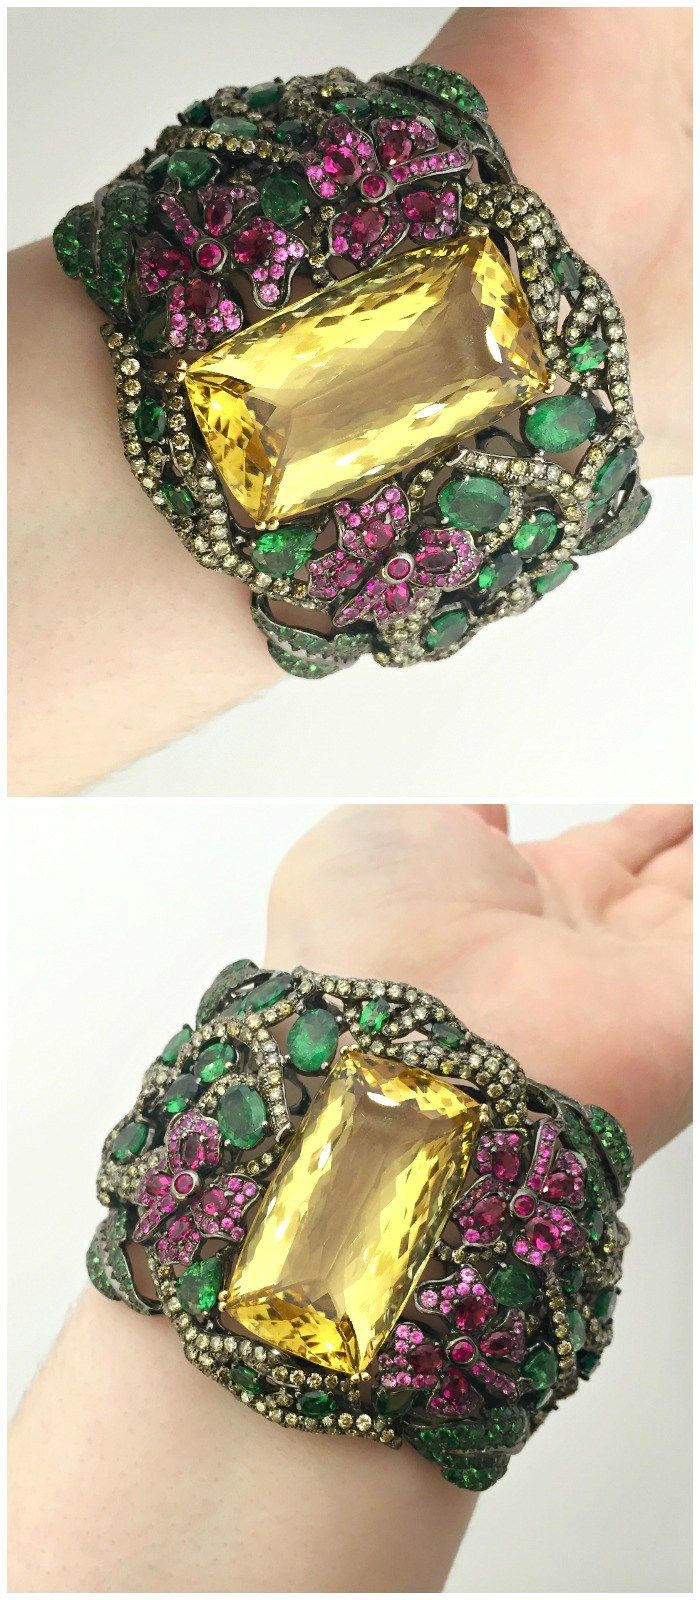 A beautiful and dramatic gemstone cuff by Wendy Yue.